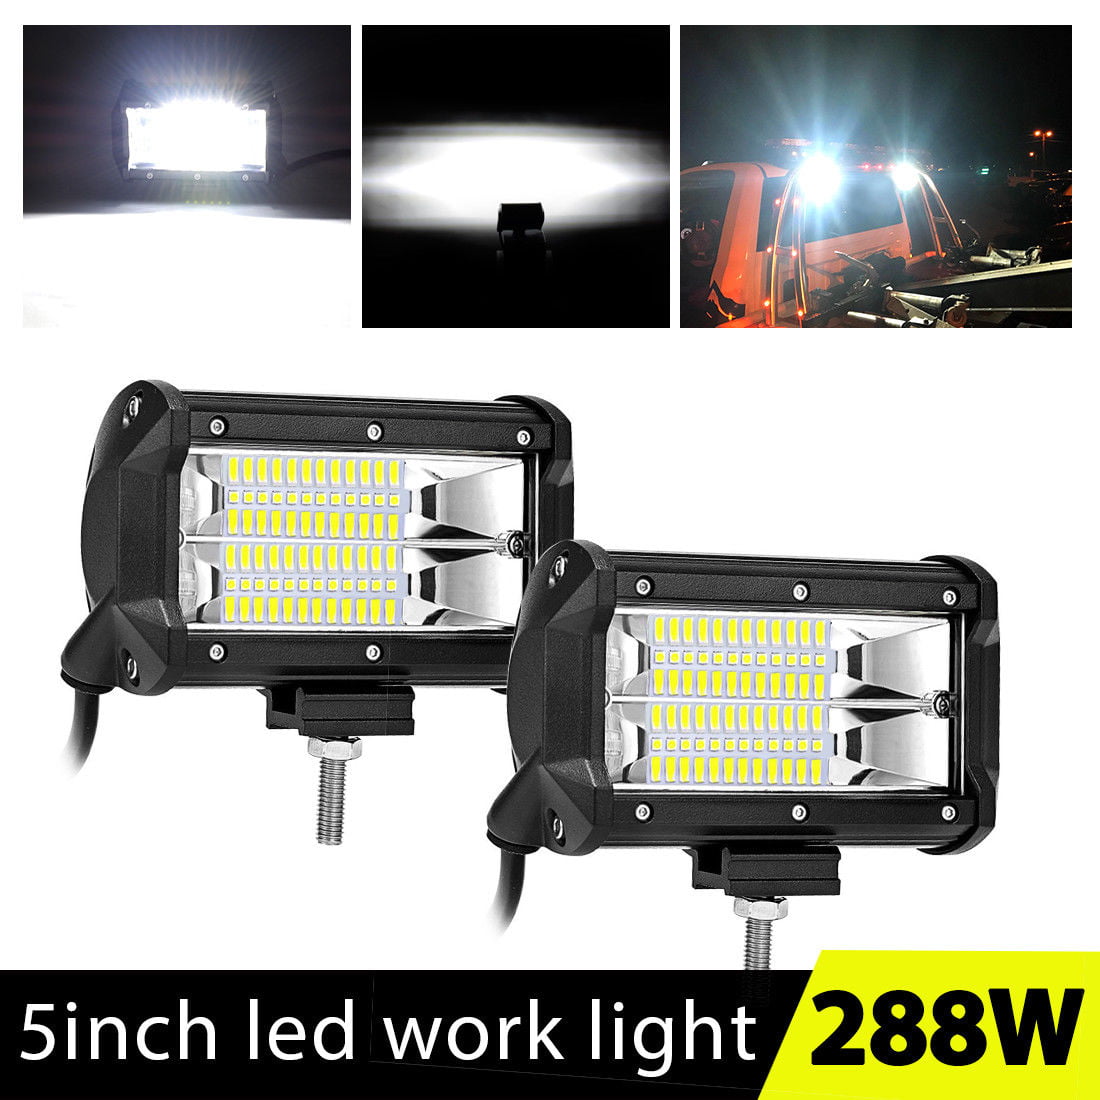 Safego 36W LED Work Lights Bar 12V Cree 4X4 Flood Beam Off road 4WD Car Trucks ATV Fog Driving Lamps Tractor 24V